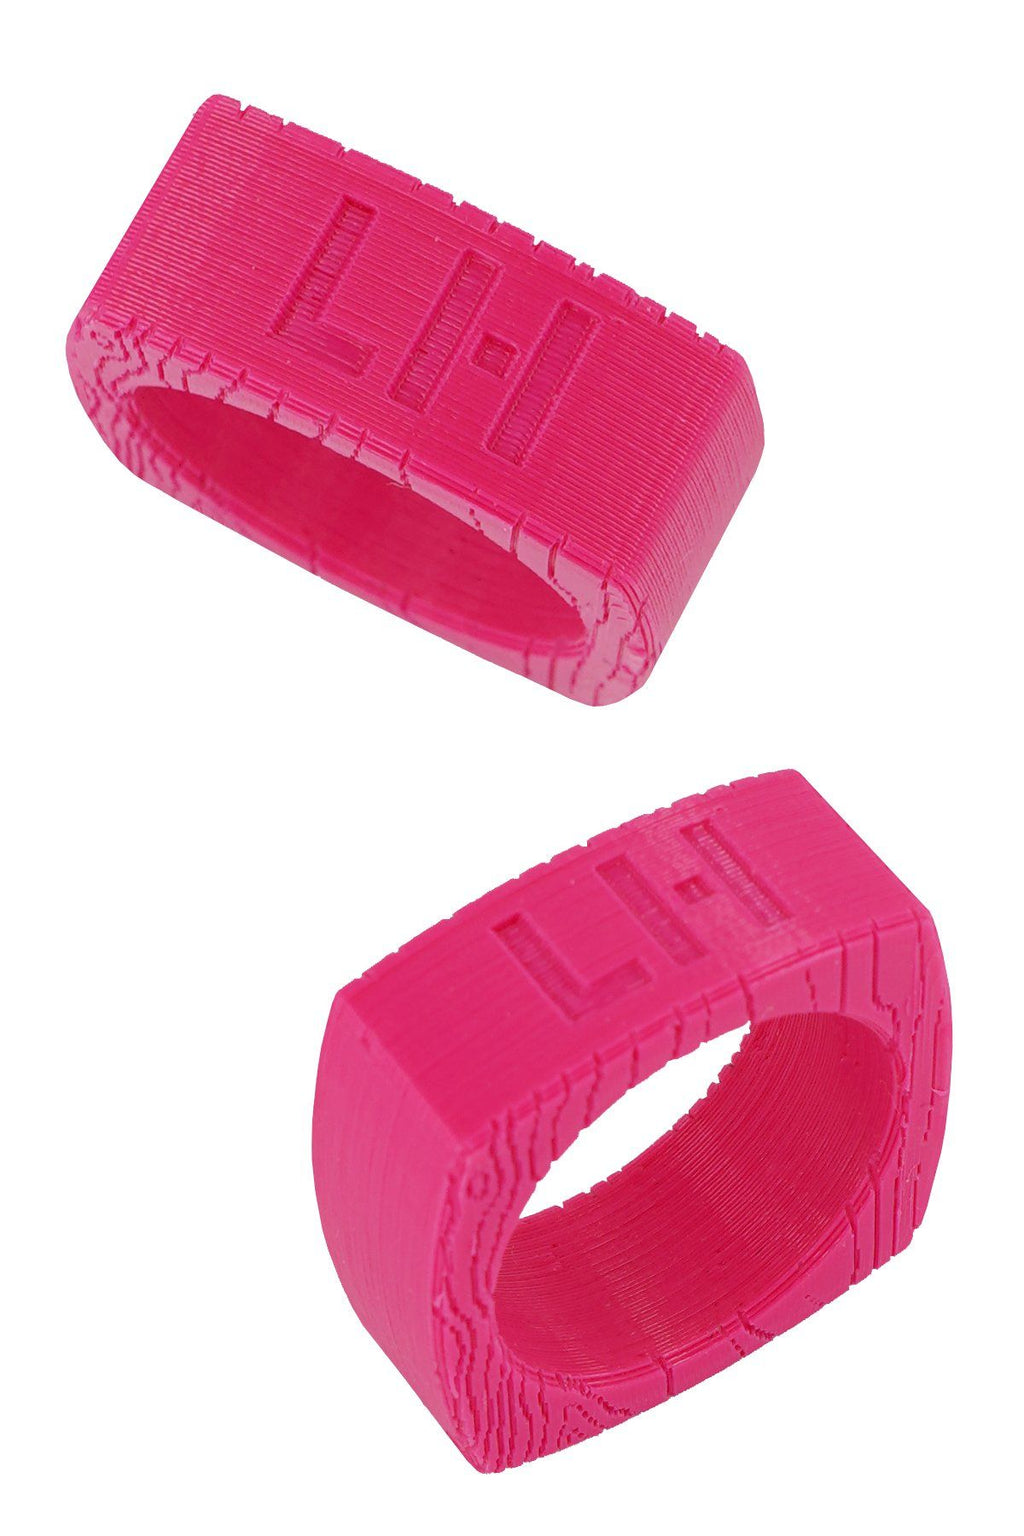 Love Hero 3D Printed Logo Ring in Pink